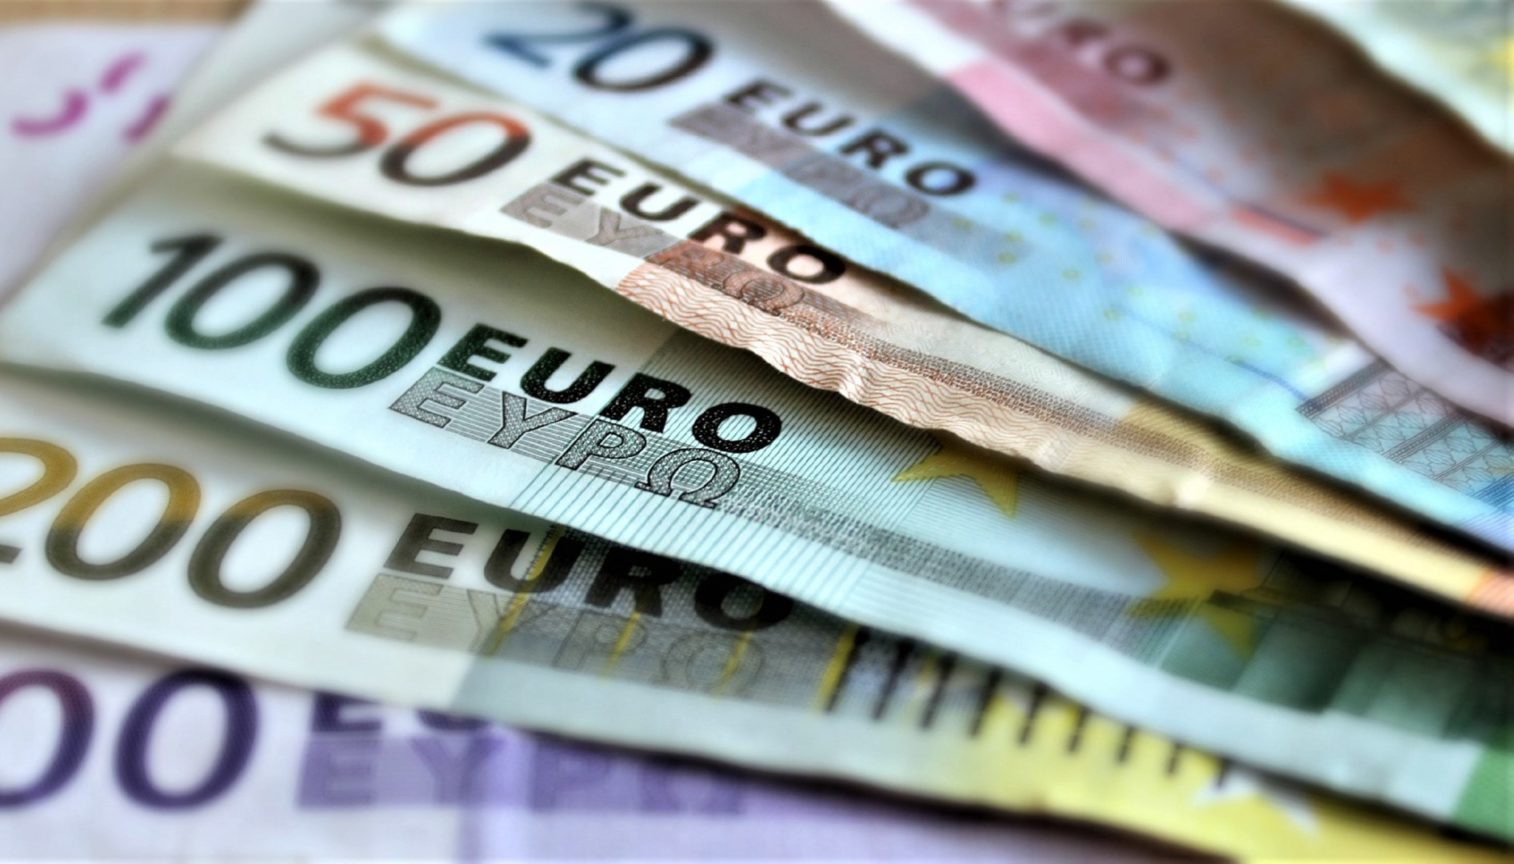 FS Euros